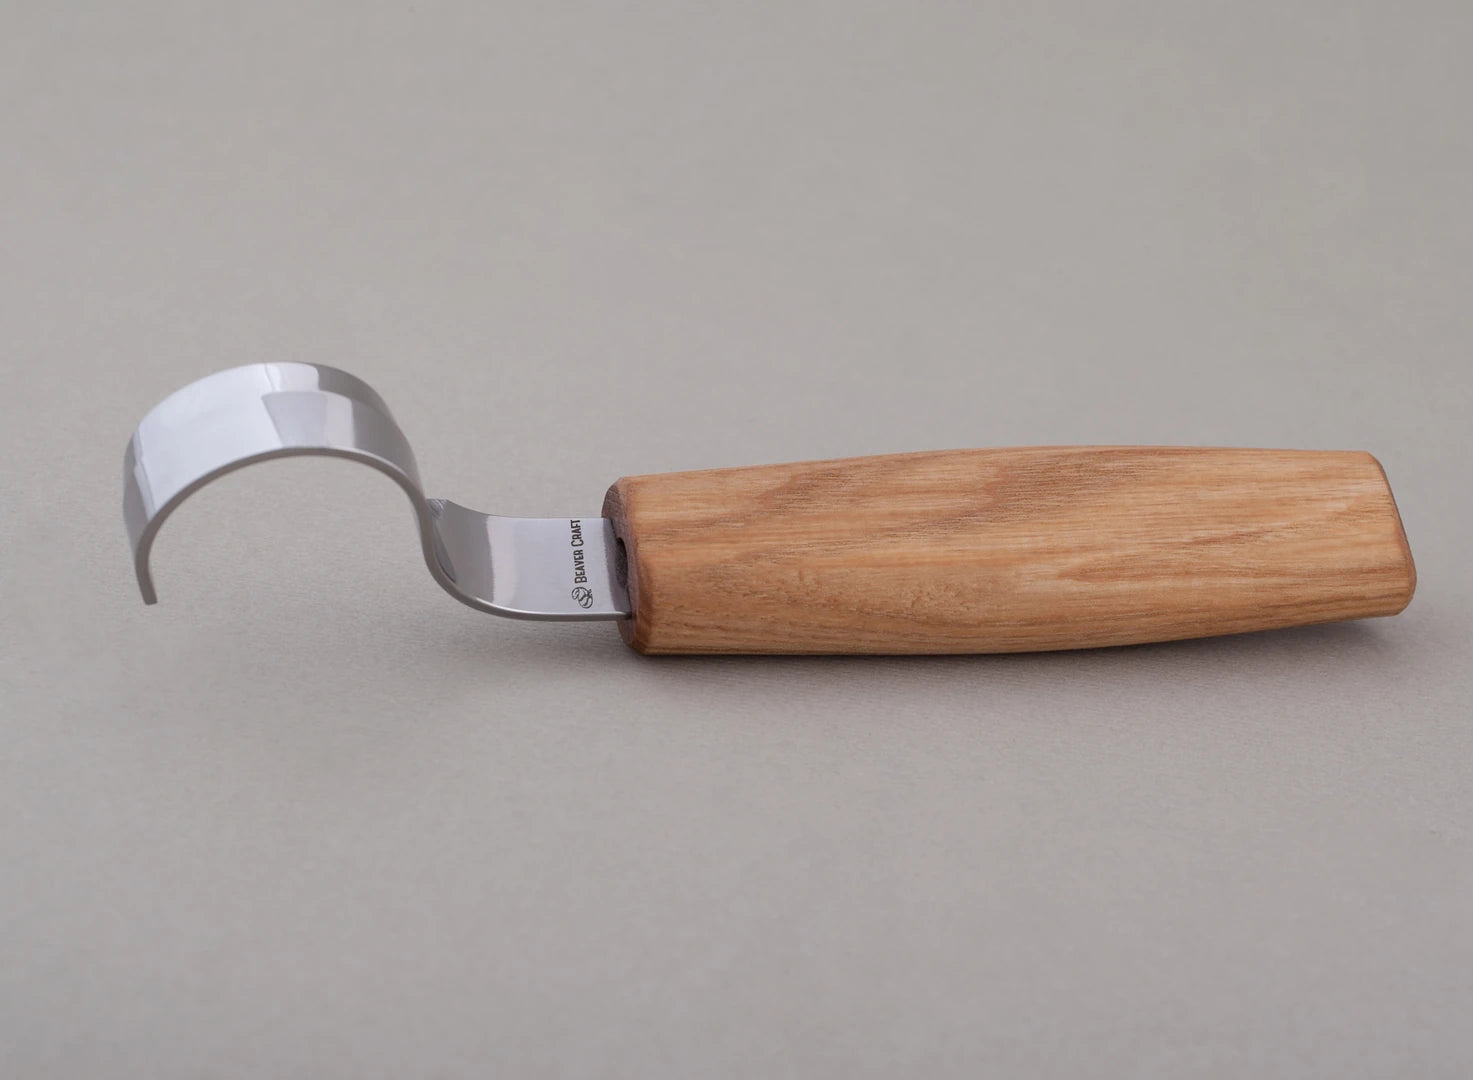 BeaverCraft SK1 - 25 mm Spoon Carving Knife